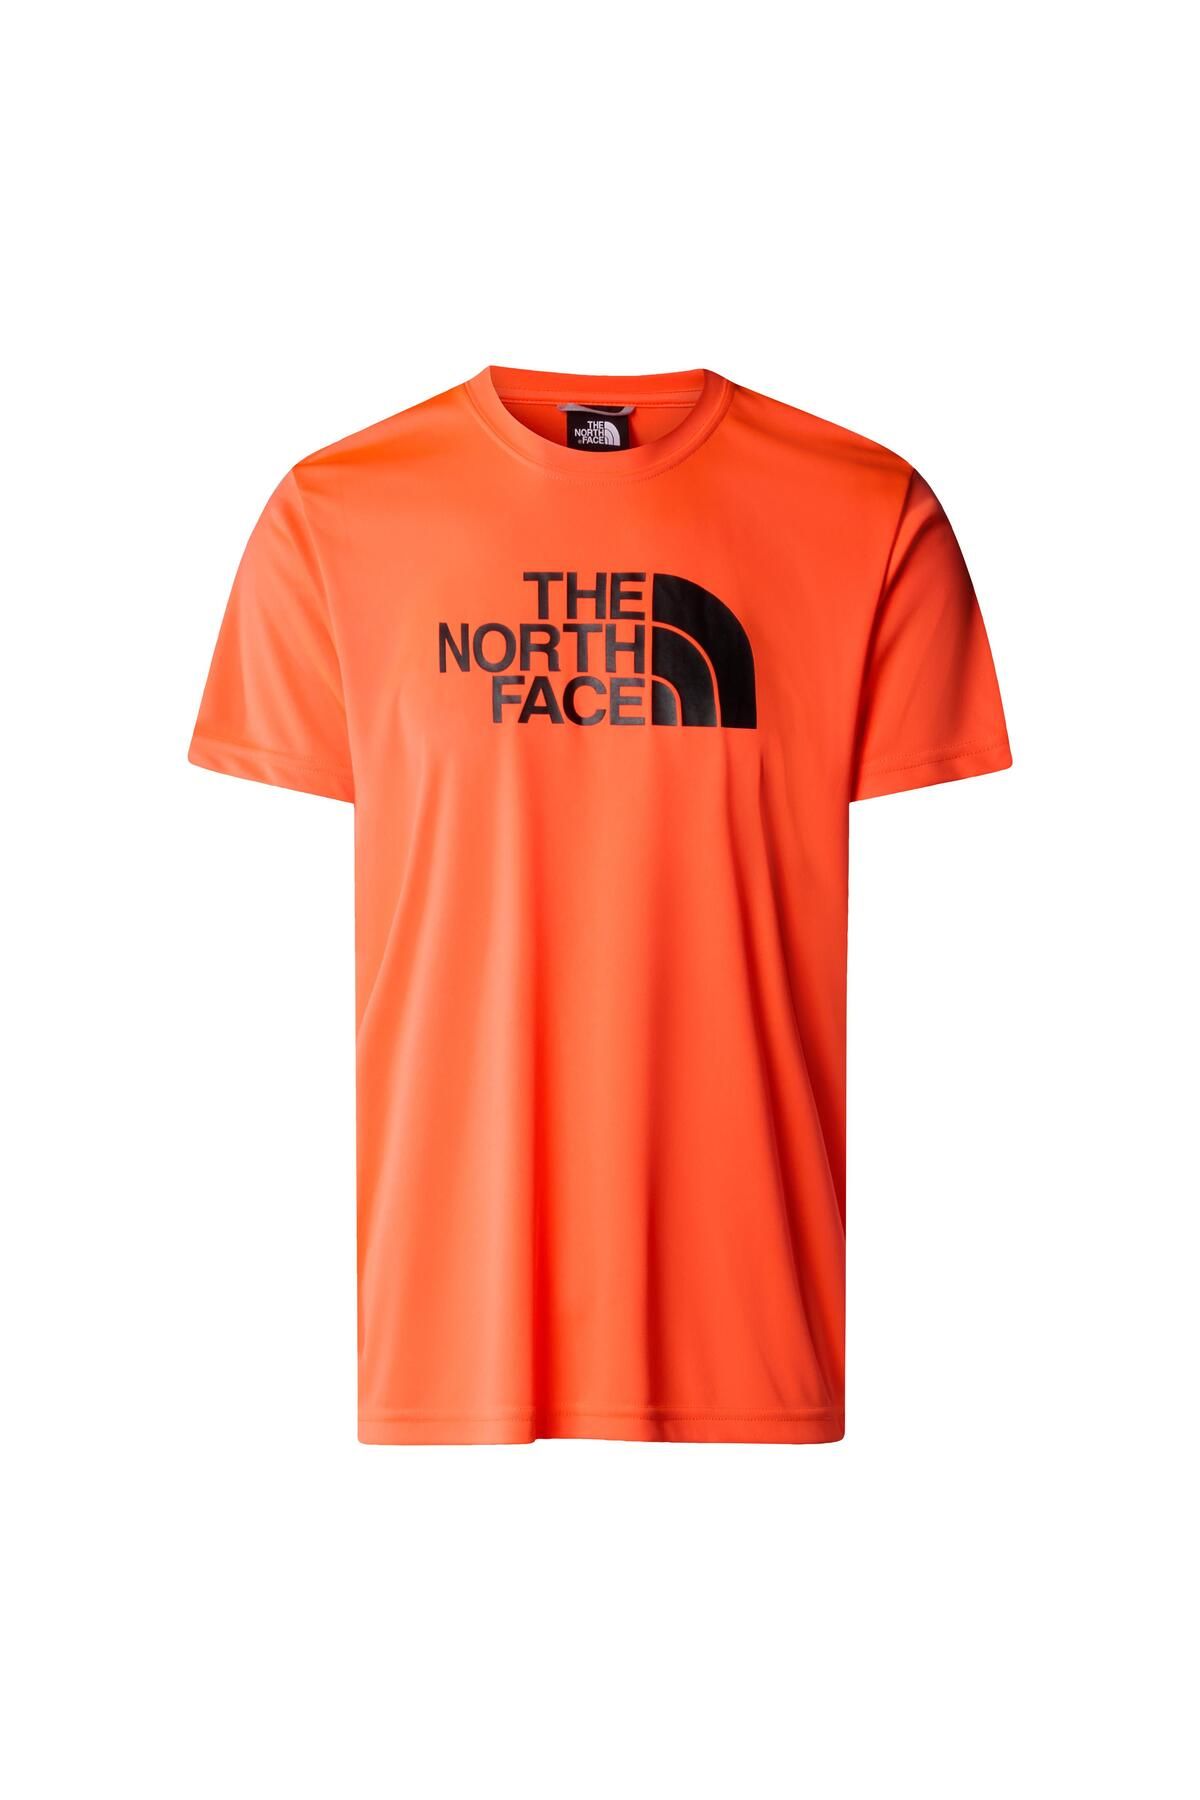 The North Face Reaxaion Easy Erkek T-Shirt Kırmızı